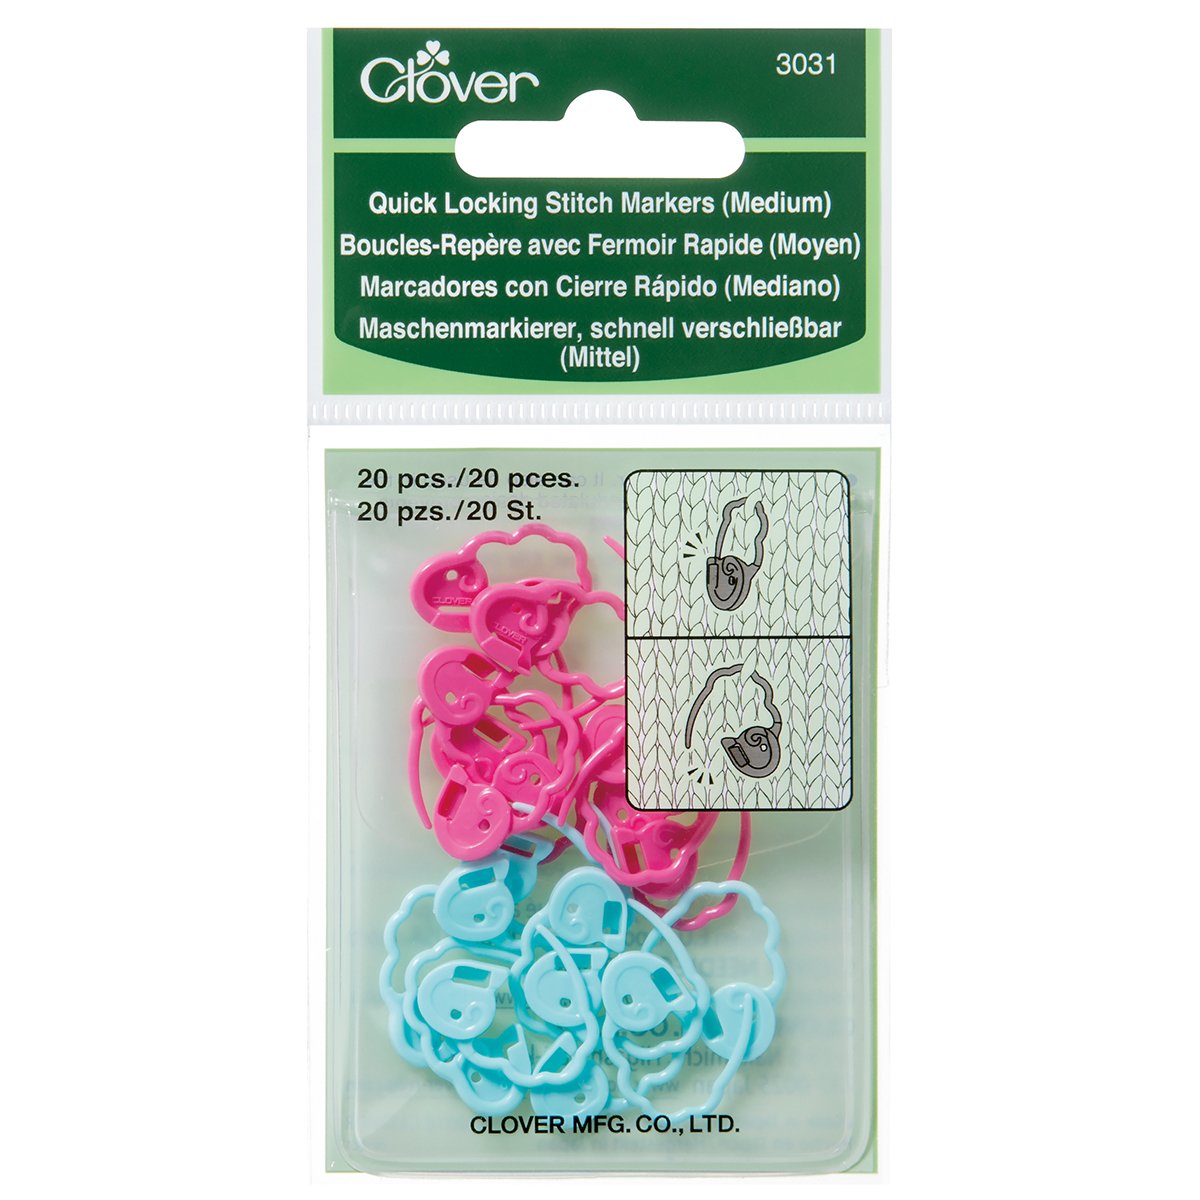 Clover 3031 Quick Locking Stitch Markers Medium